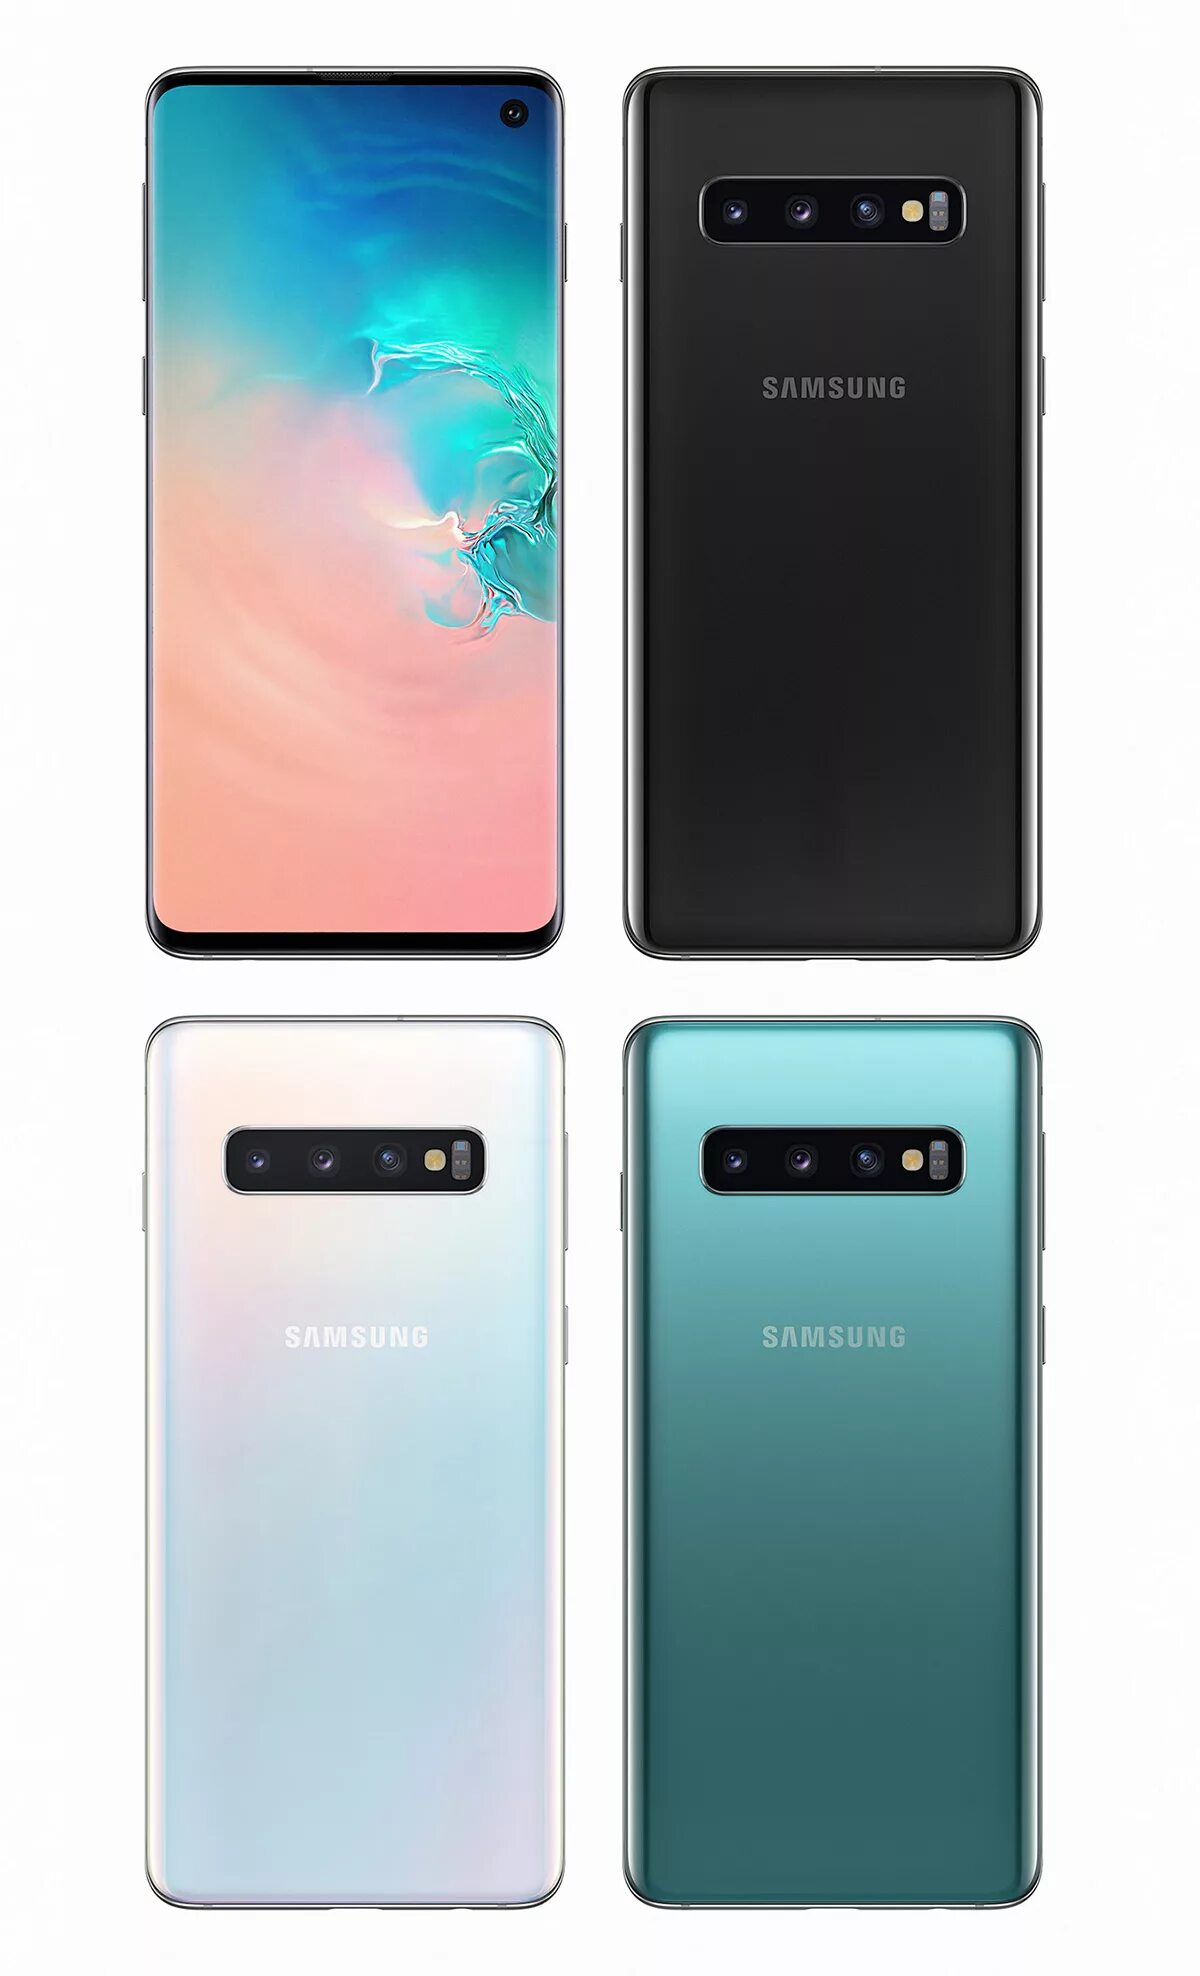 Самсунг новая 10. Samsung Galaxy s10. Samsung Galaxy s10 Samsung. Samsung s10 Plus. Samsung Galaxy s10 / s10 +.